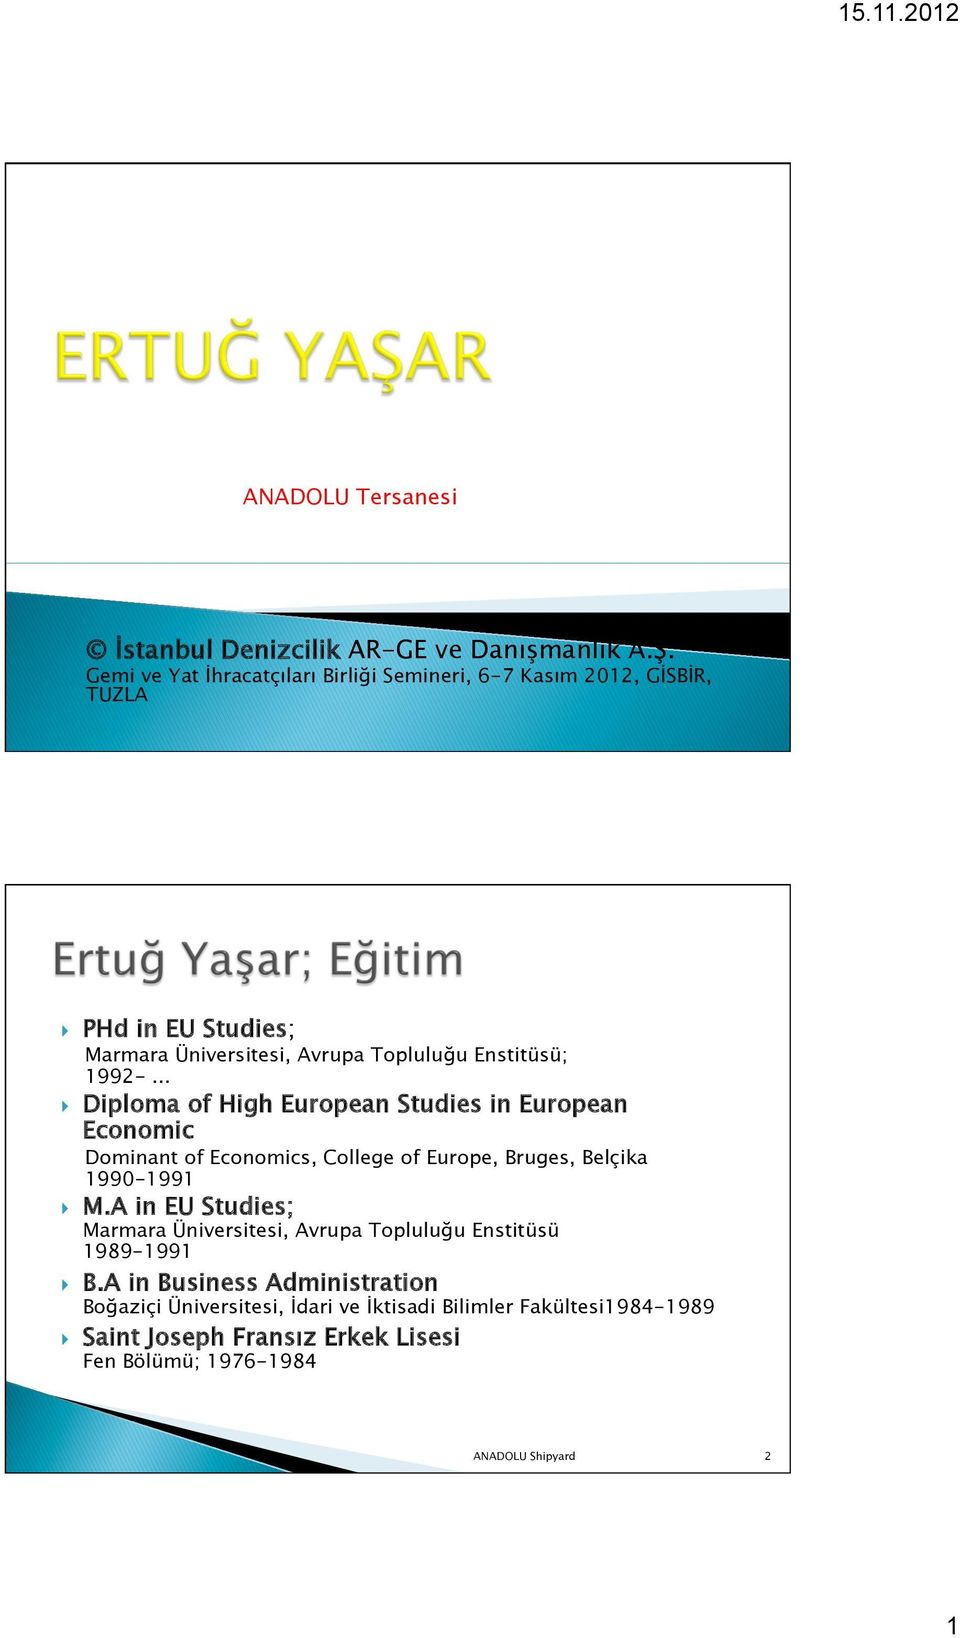 .. } Diploma of High European Studies in European Economic Dominant of Economics, College of Europe, Bruges, Belçika 1990-1991 } M.